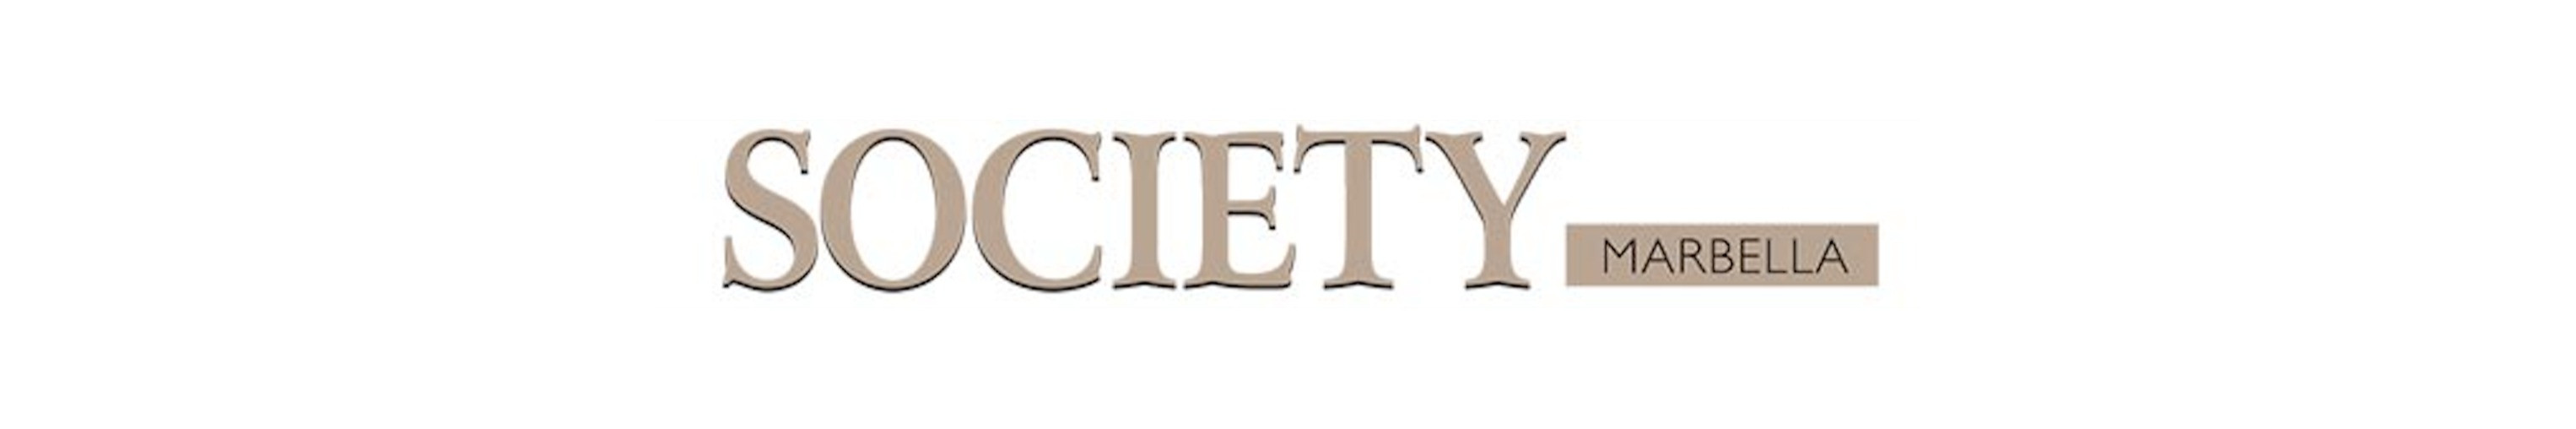 Society Marbella Magazine